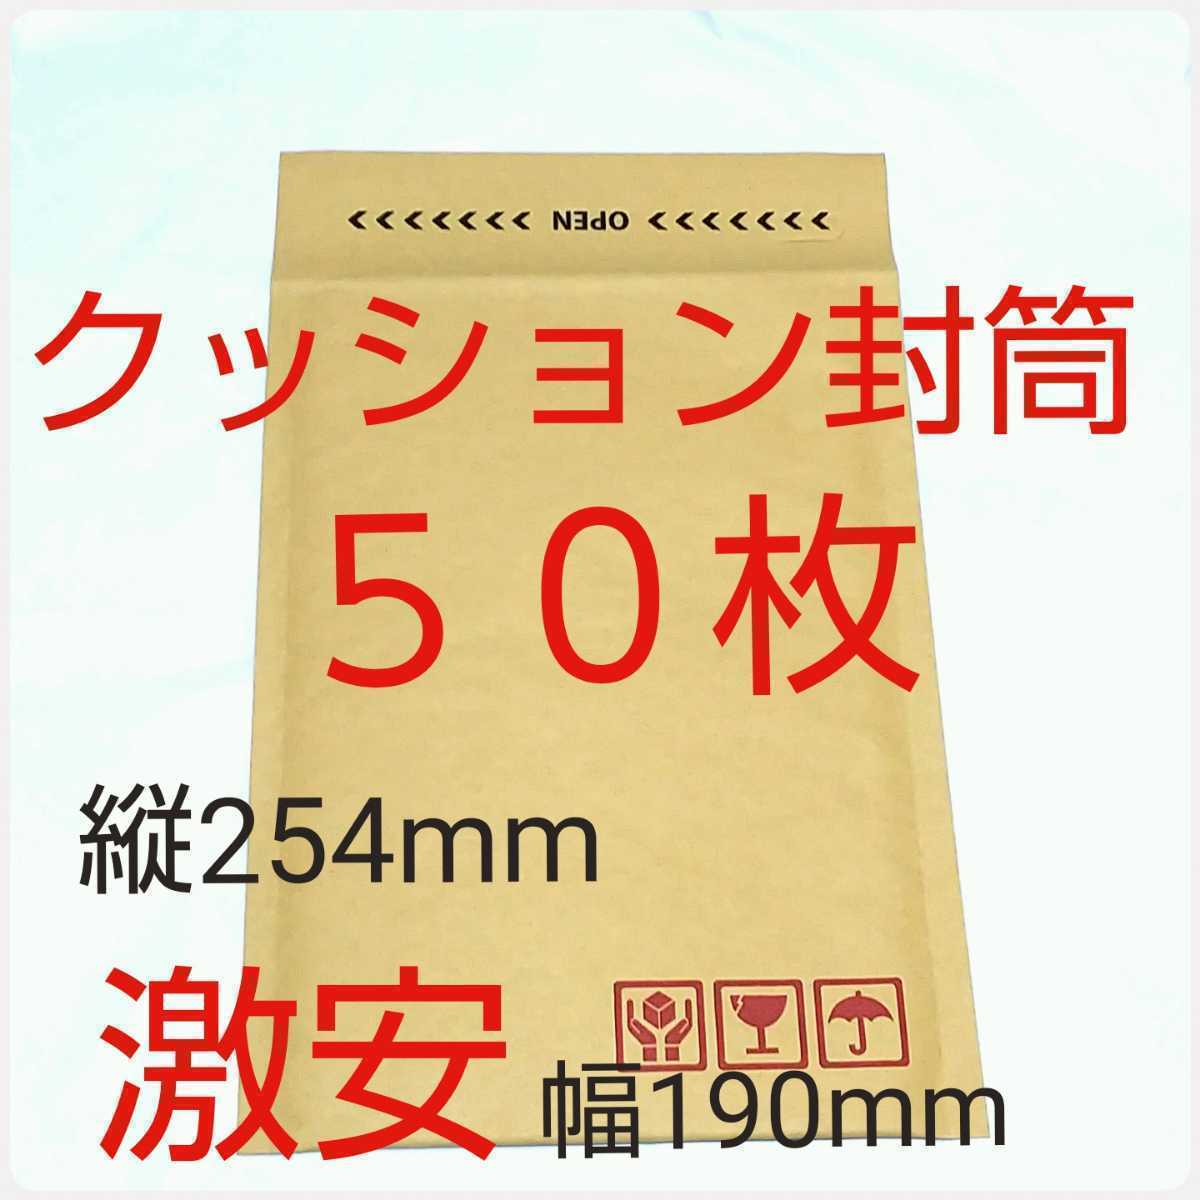  подушка  конверт   лента   идет в комплекте   уход  ... штамп   буква    имеется  190×254×50mm ５0 шт. 